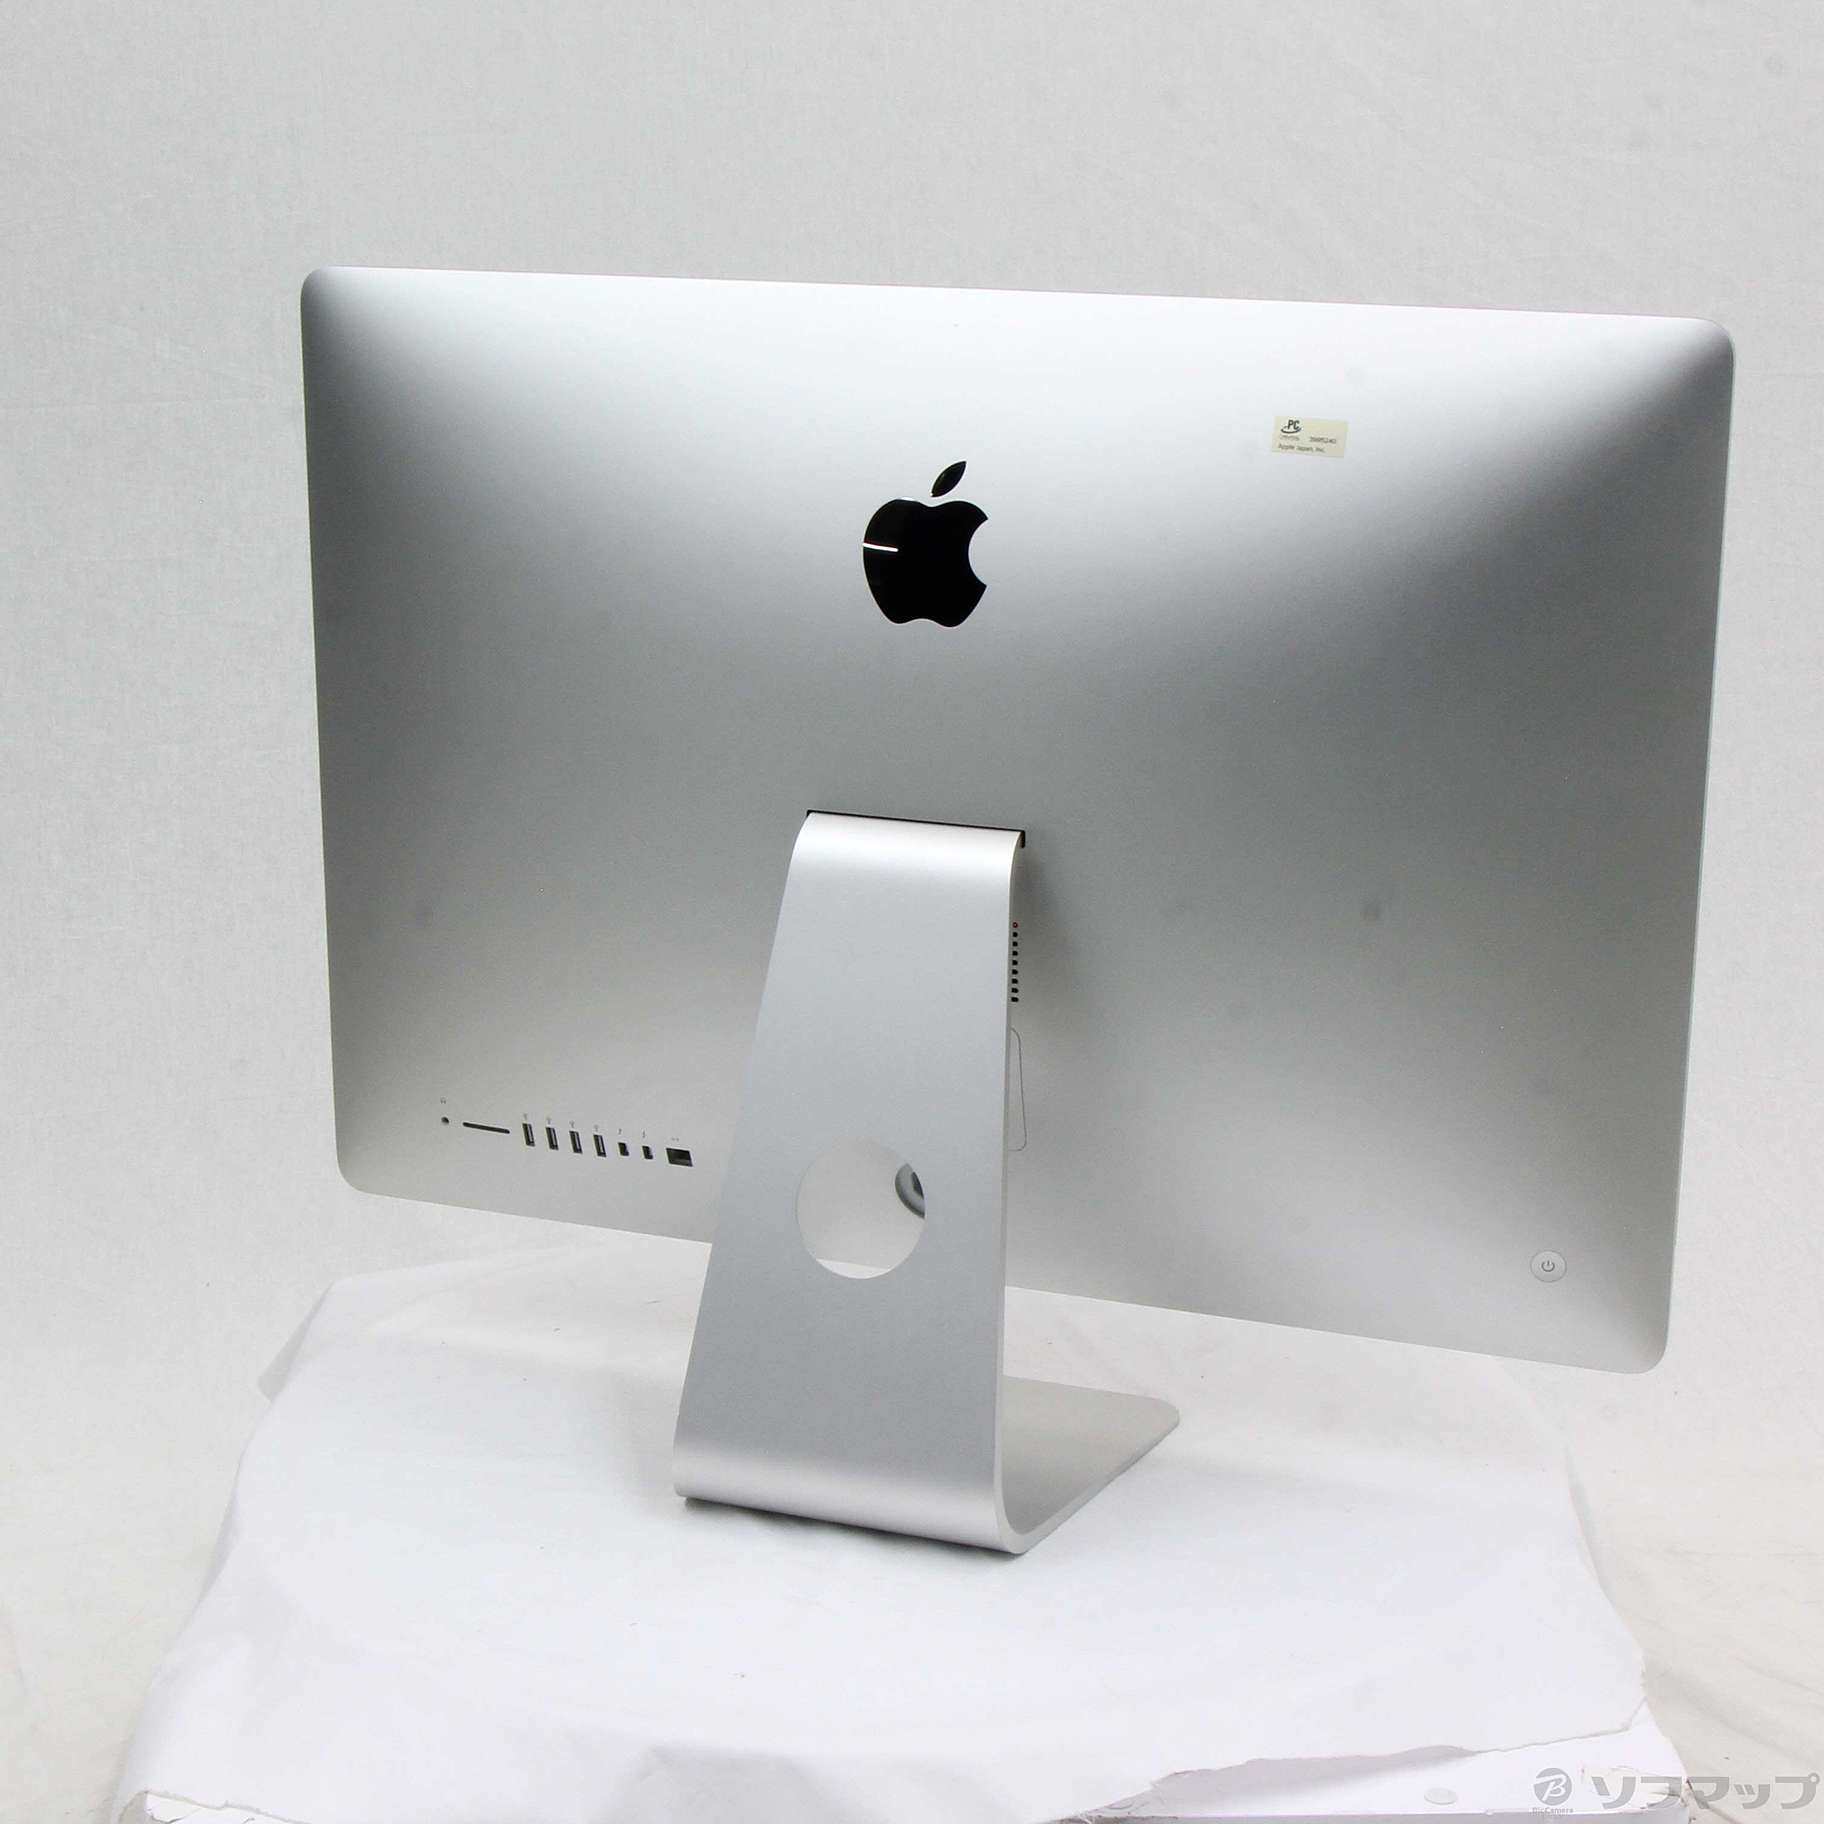 中古】iMac 27-inch Late 2012 MD095J／A Core_i5 2.9GHz 8GB HDD1TB